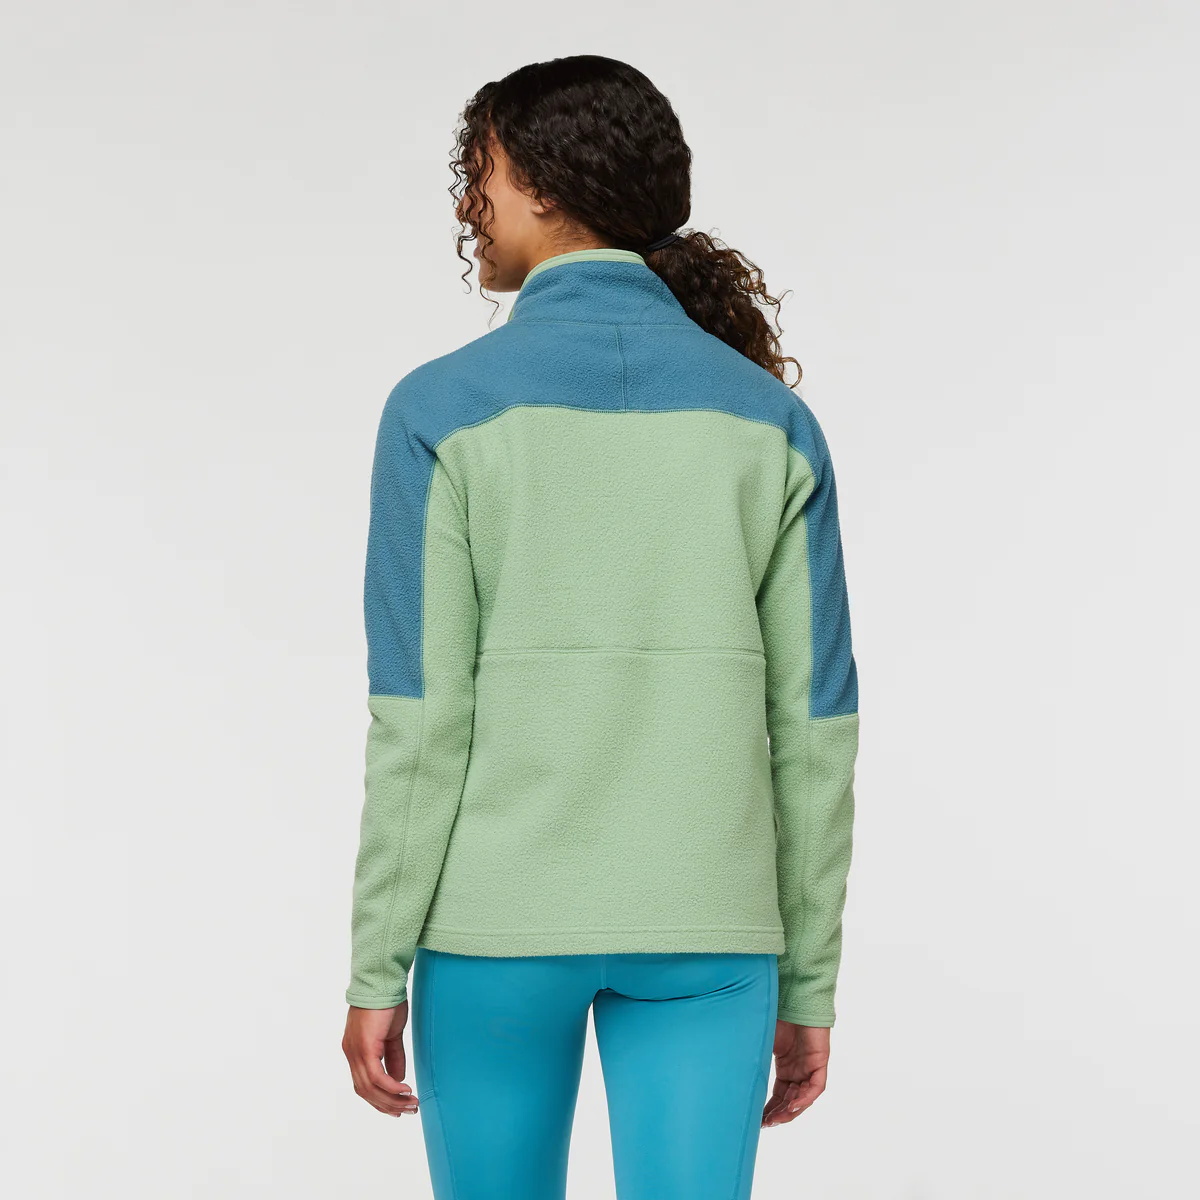 Women's Abrazo Half-Zip Fleece - We're Outside Outdoor Outfitters